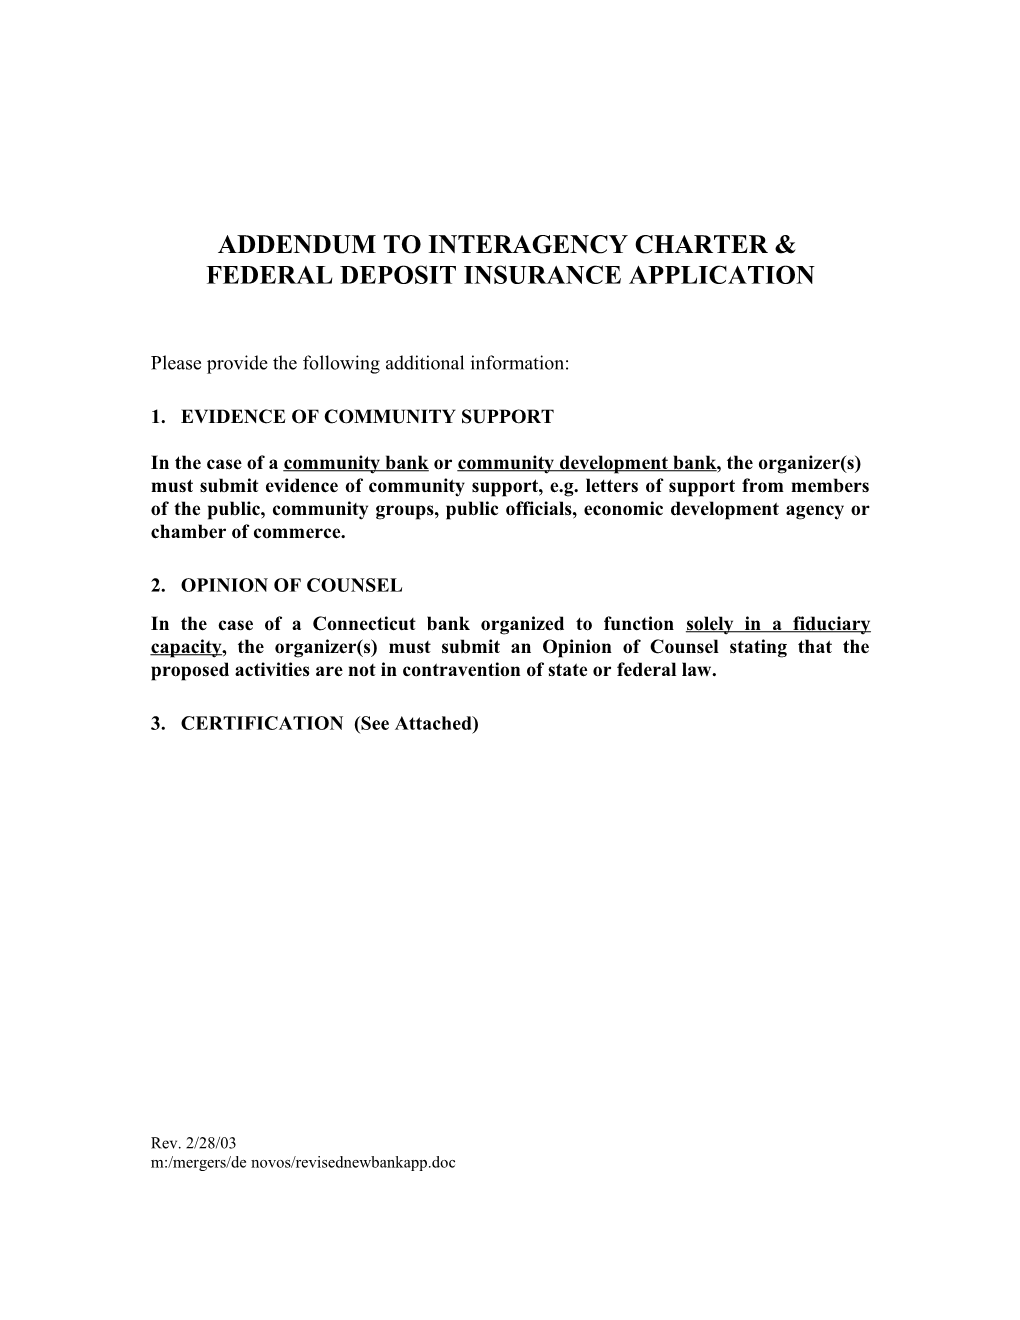 Addendum to Interagency Charter & Federal Deposit Insurance Application